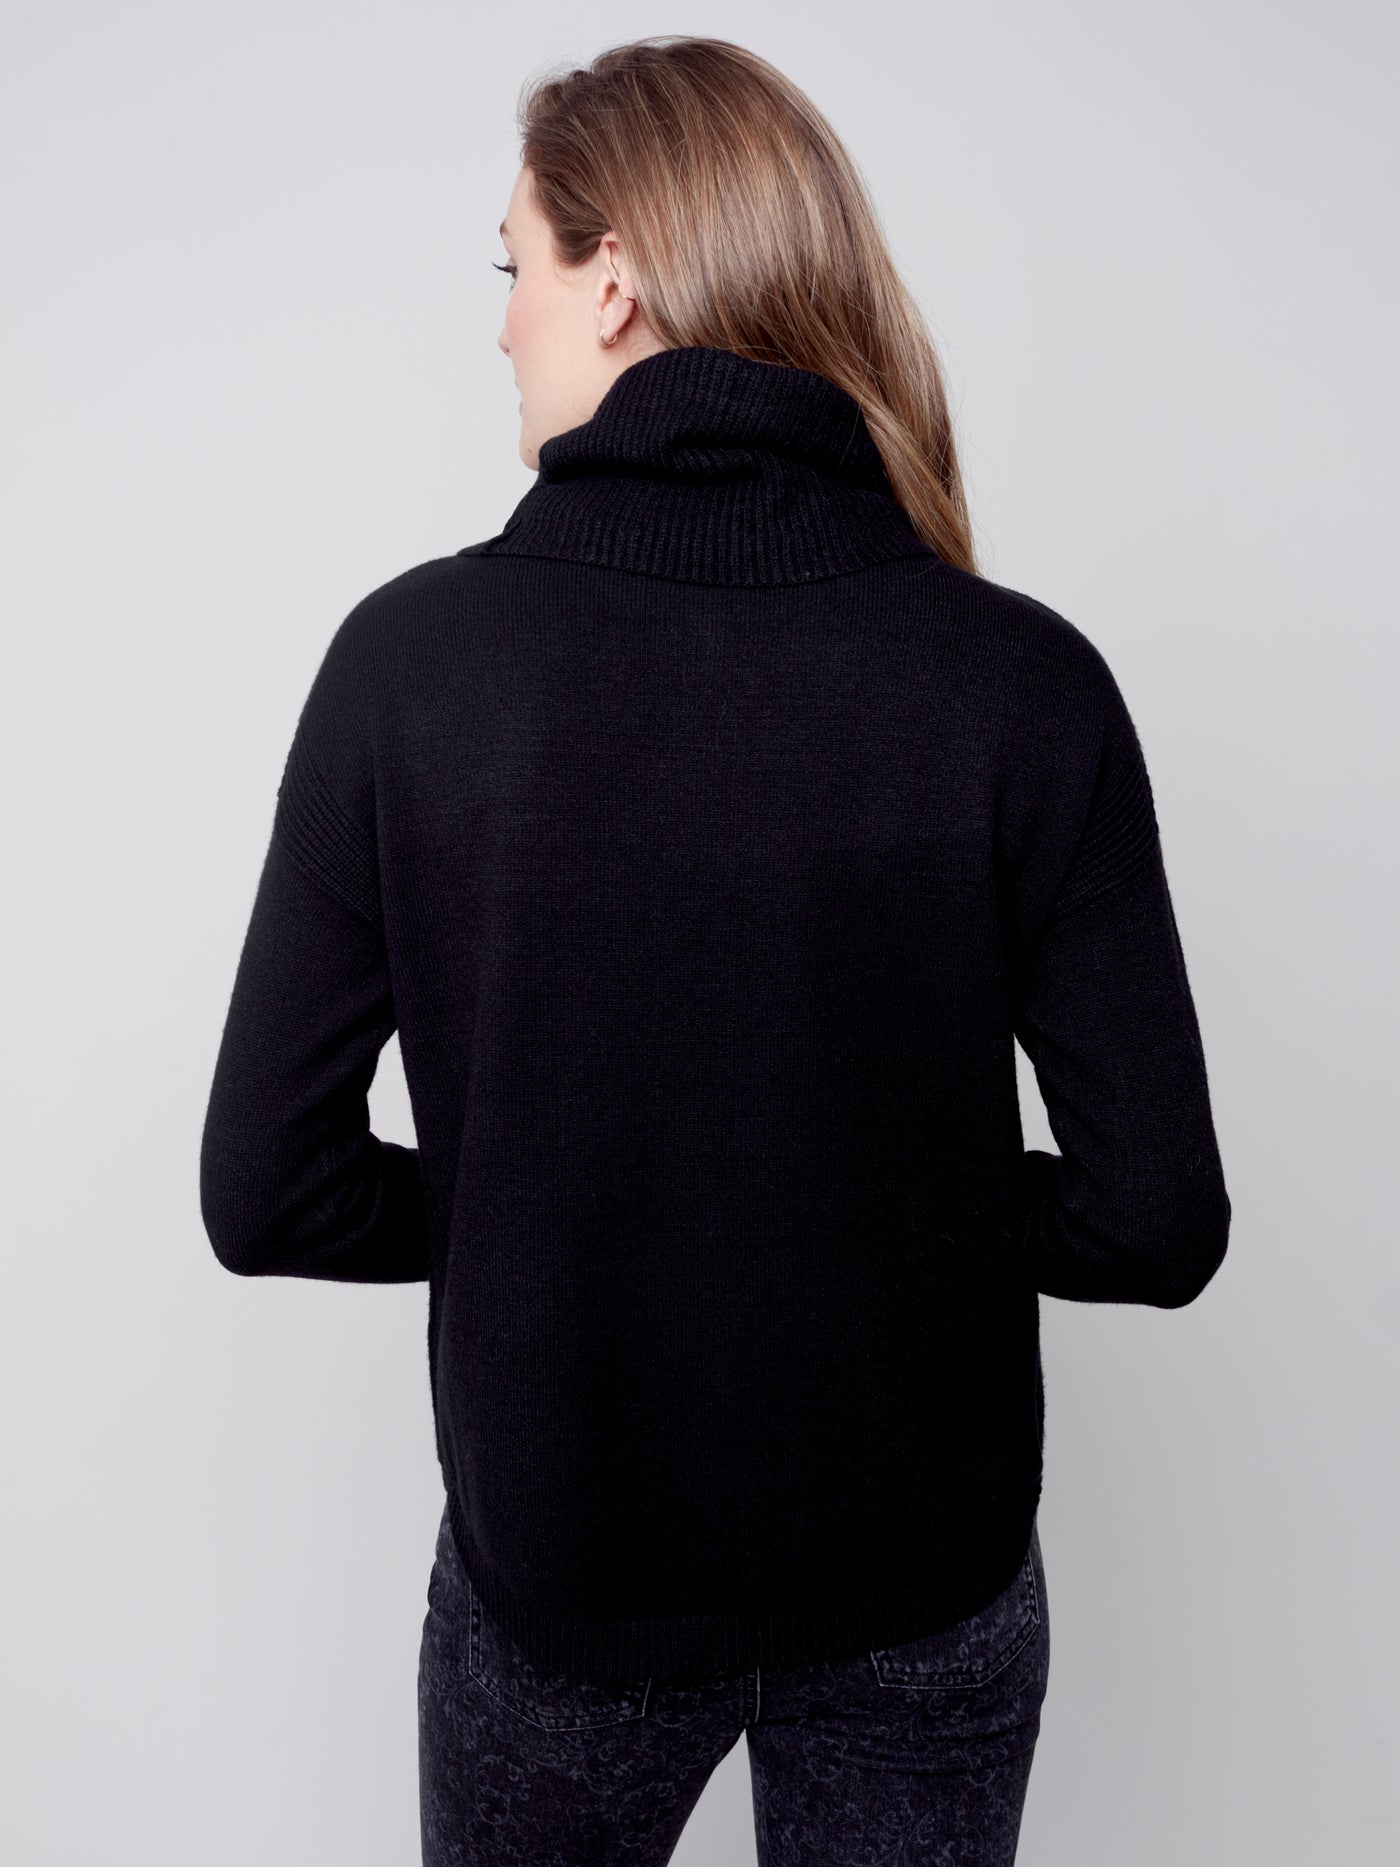 Charlie B Top - Scarf Sweater - Black